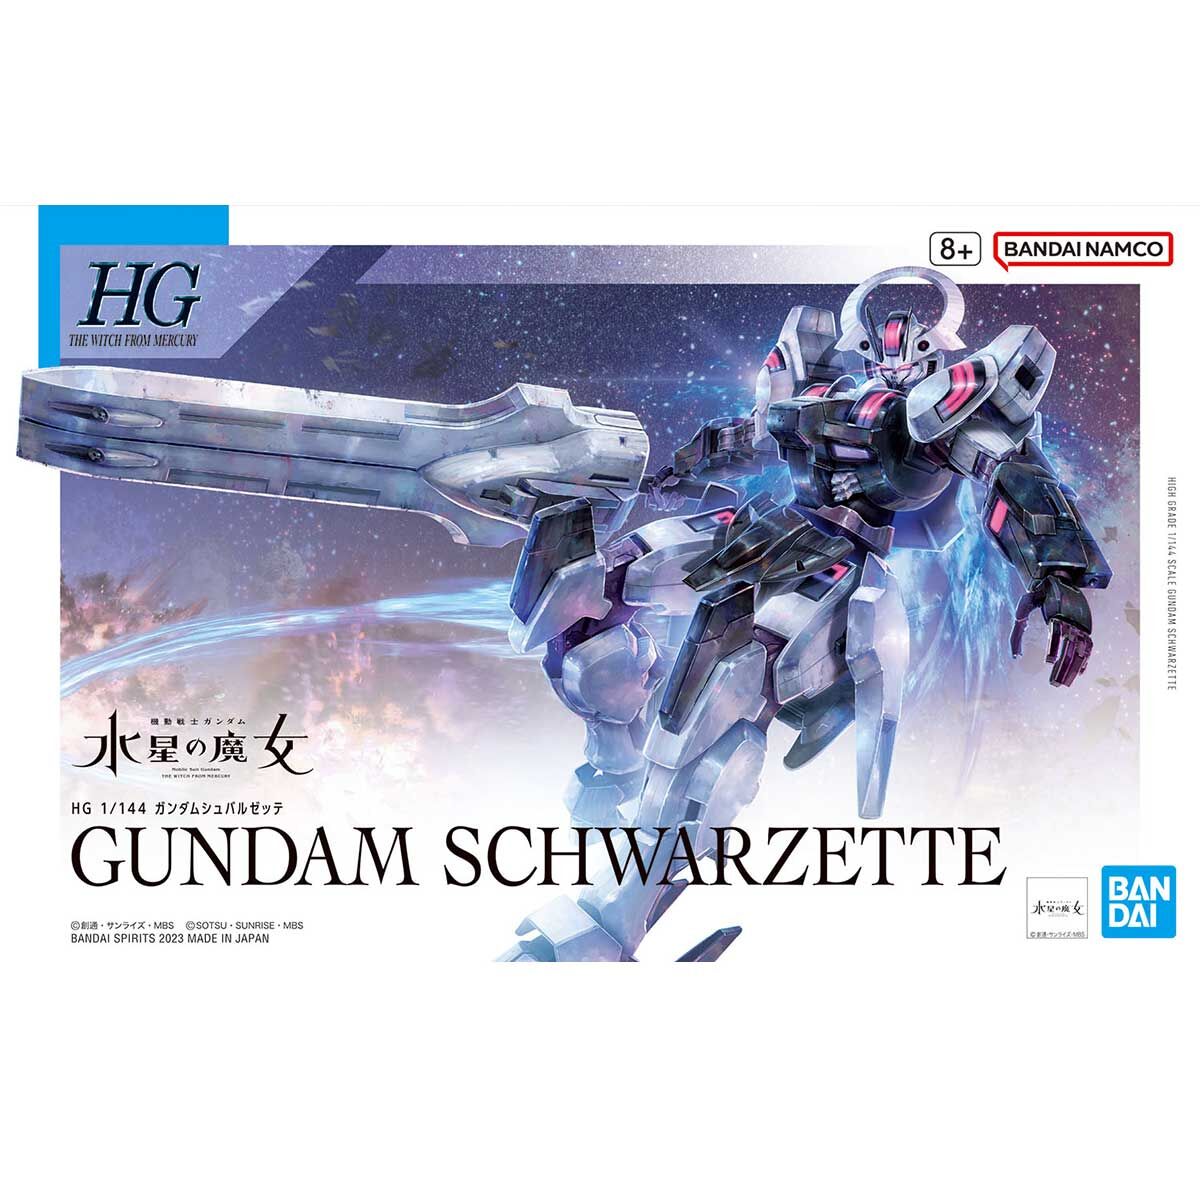 Bandai 1/144 HG-GUNDAM: THE WITCH FROM MERCURY 025 Schwarzette Plastic Model Kit